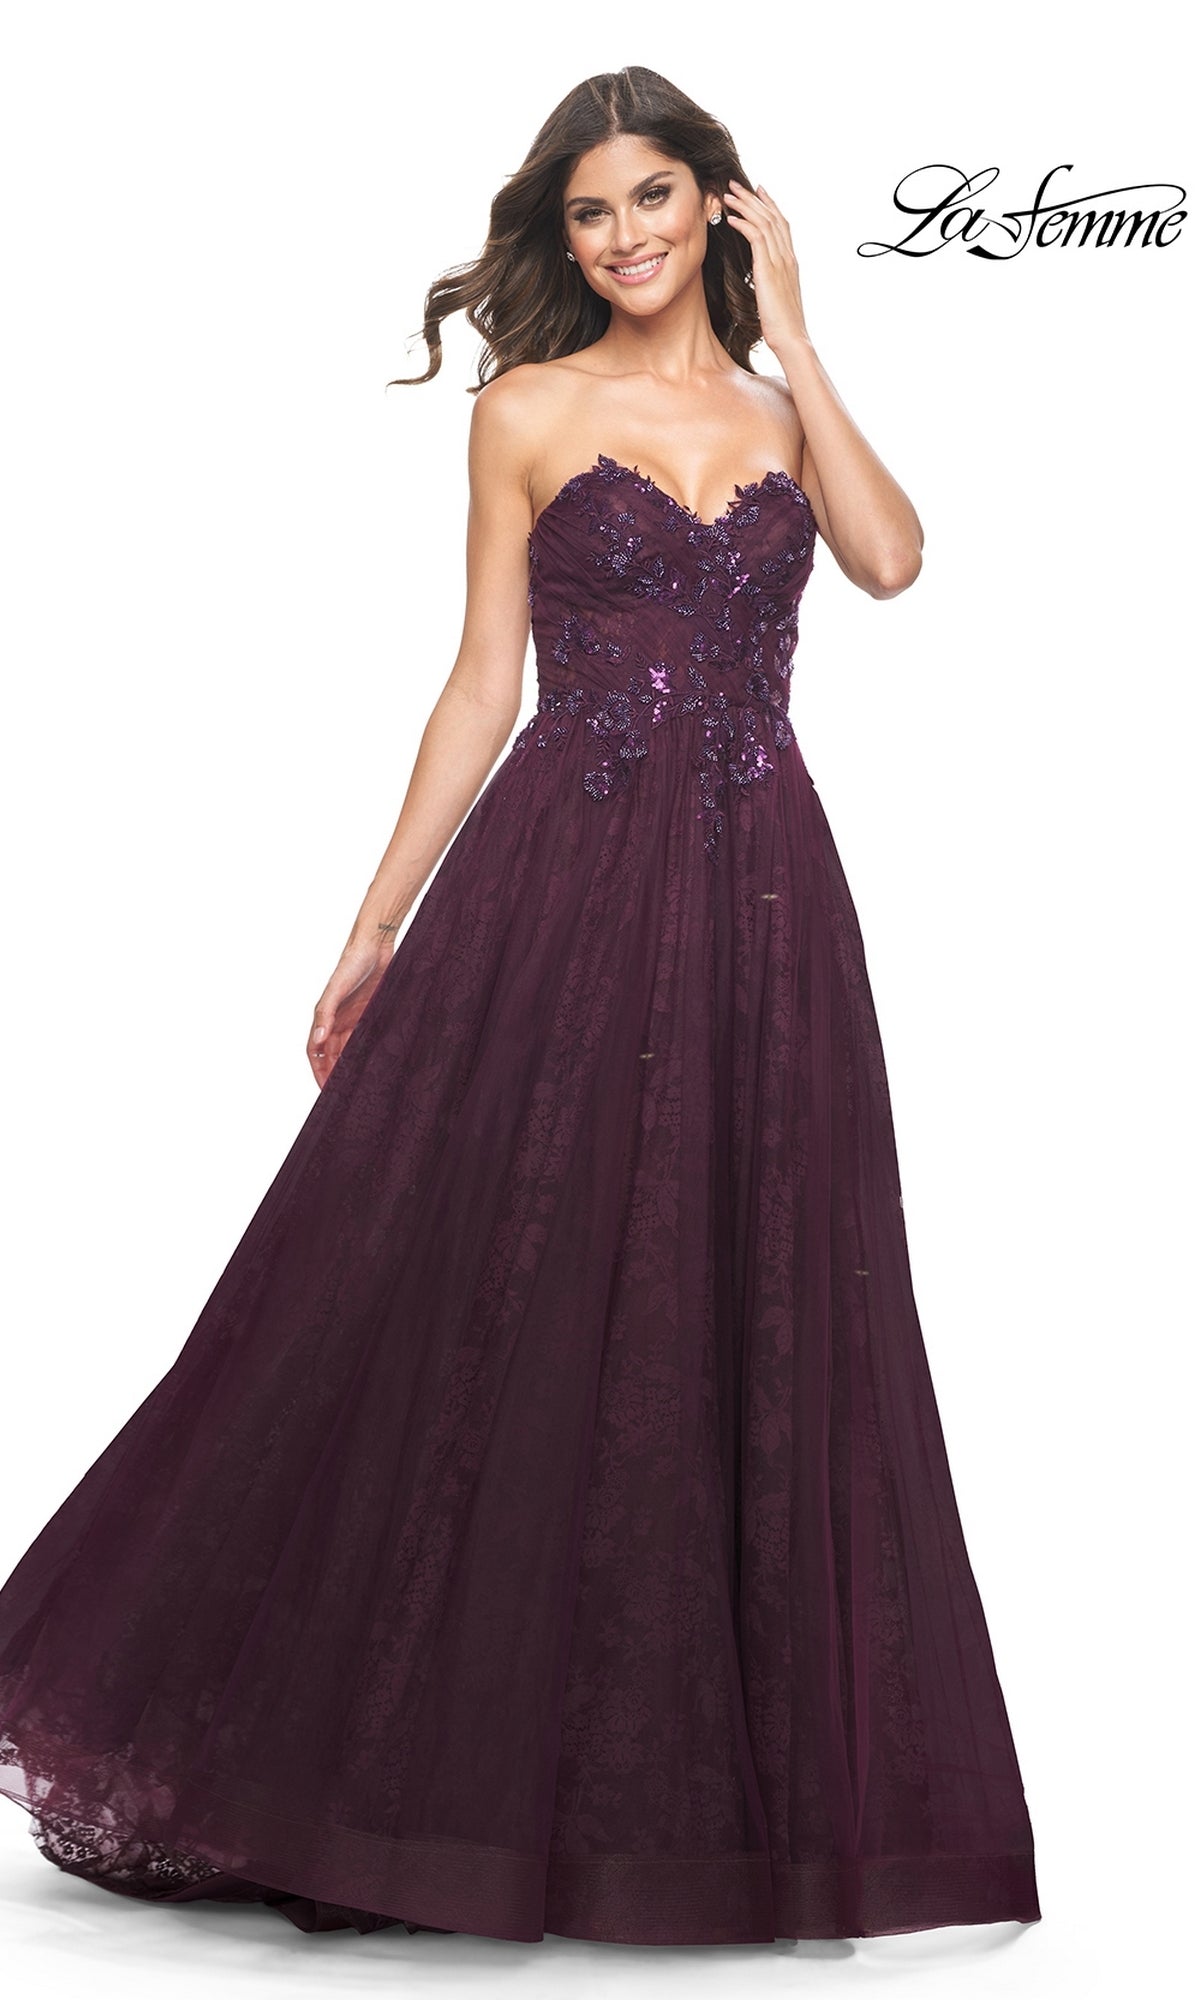  La Femme 31954 Formal Prom Dress